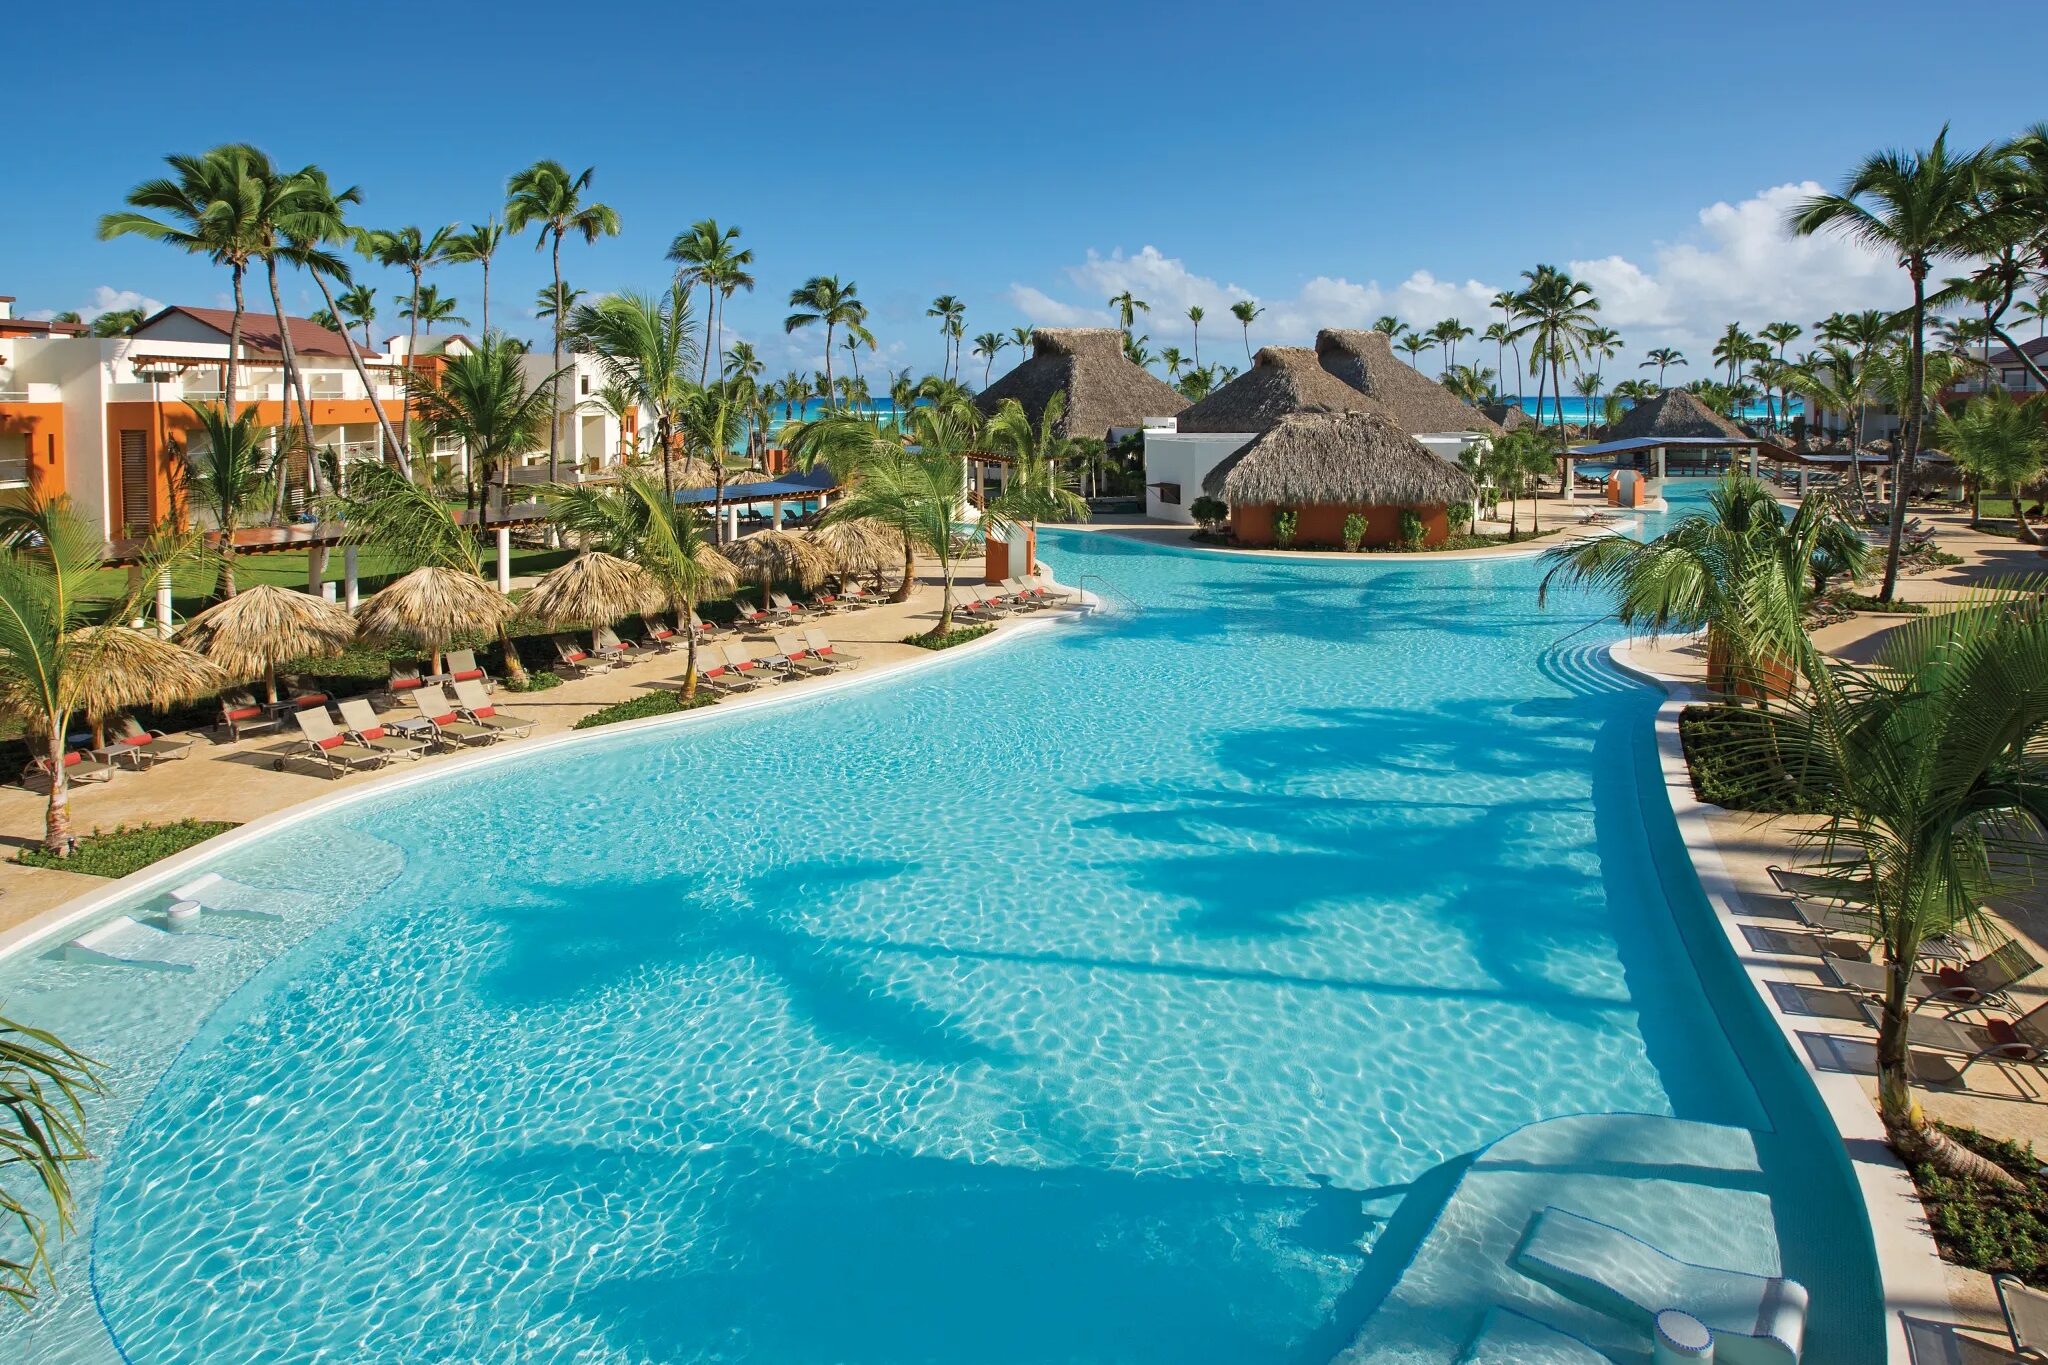 Pool and surrounding building at Breathless Punta Cana Resort & Spa